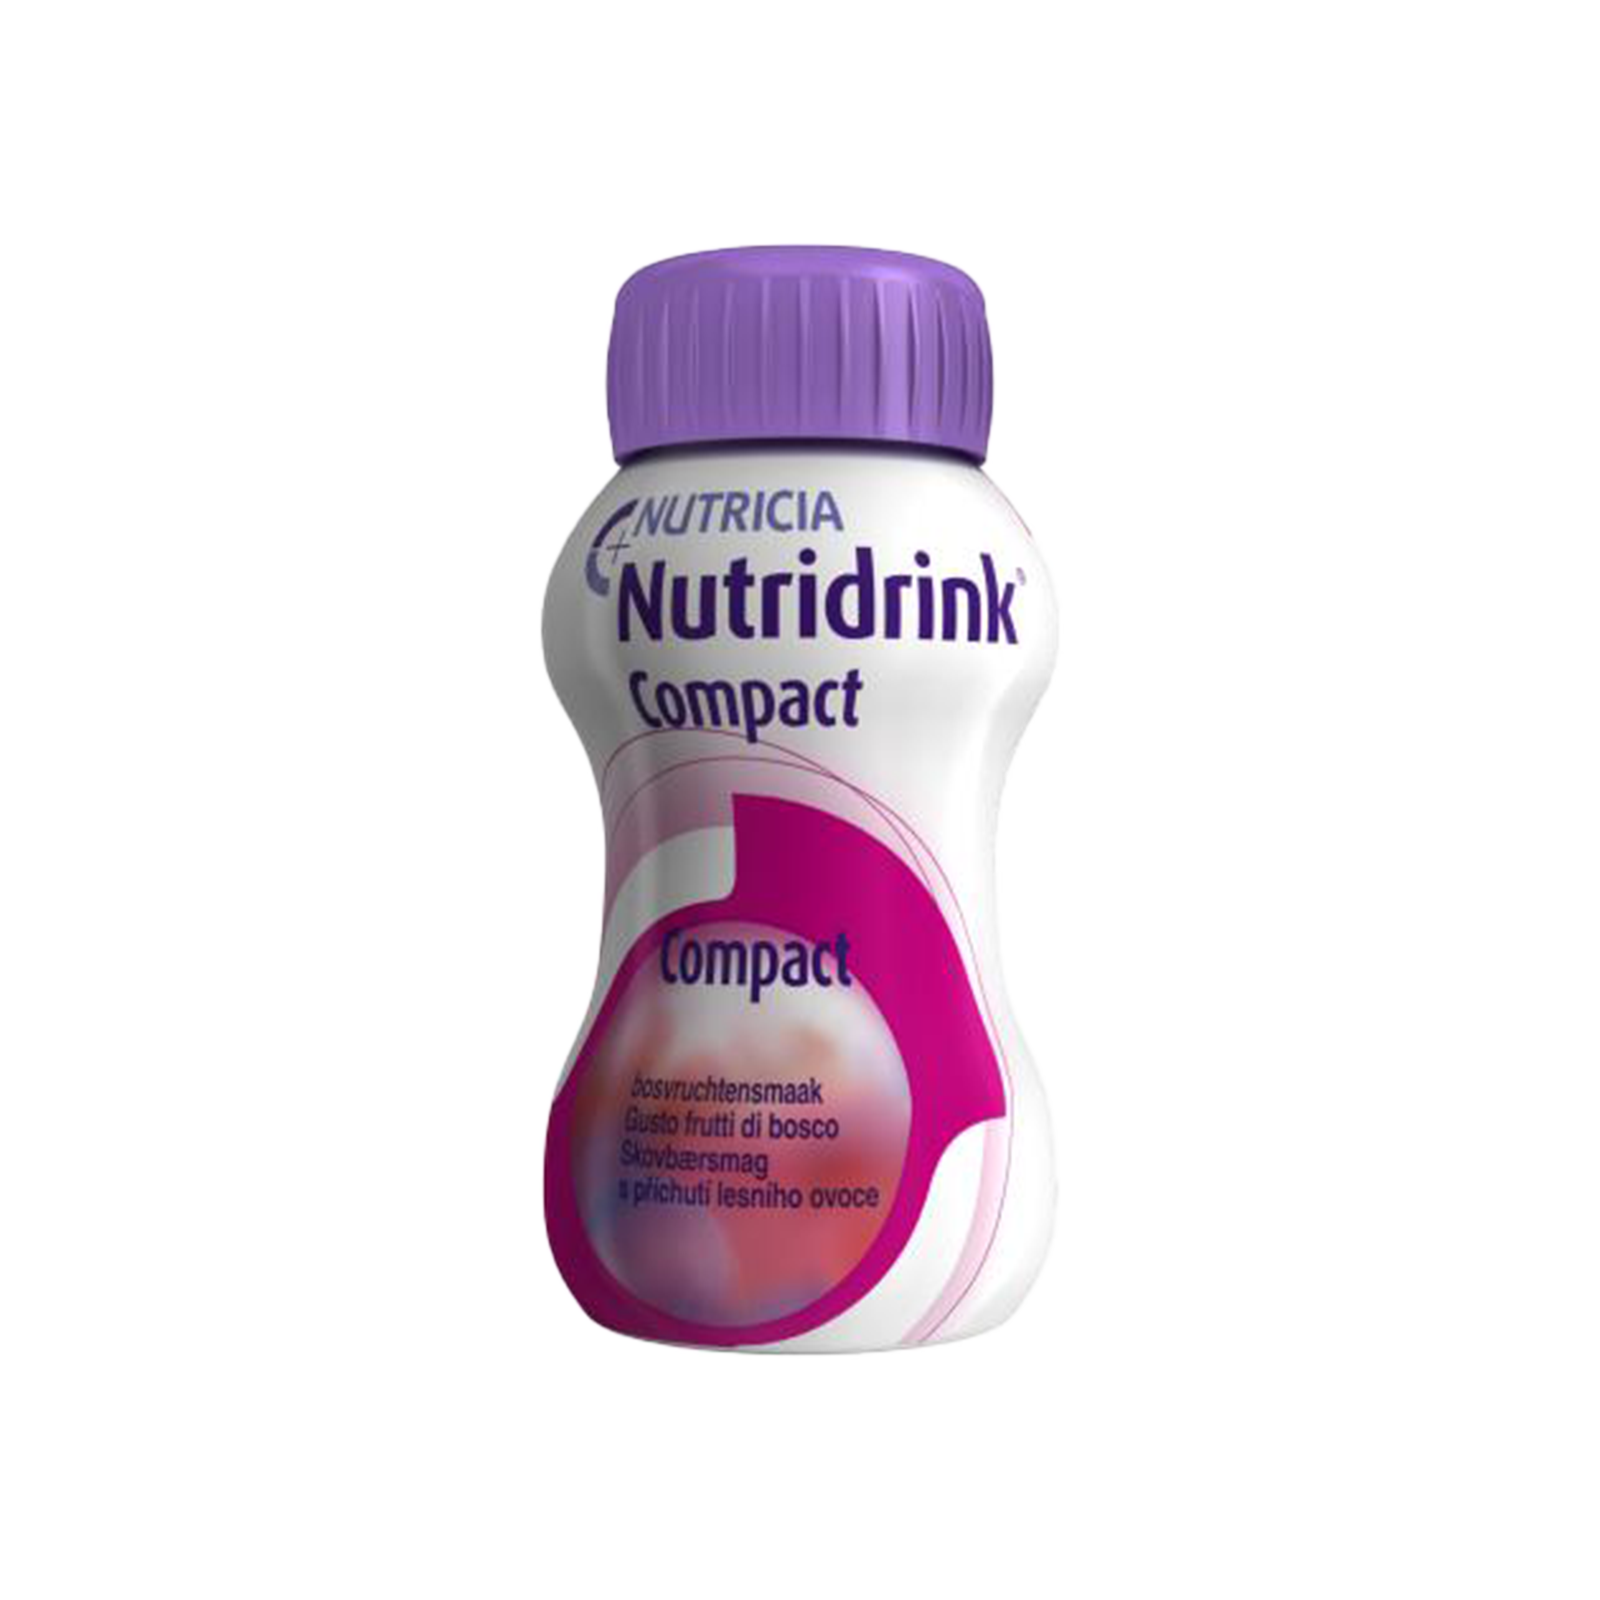 Nutridrink Compact Frutti bosco 24x Bottiglia 125 ml | Nutricia